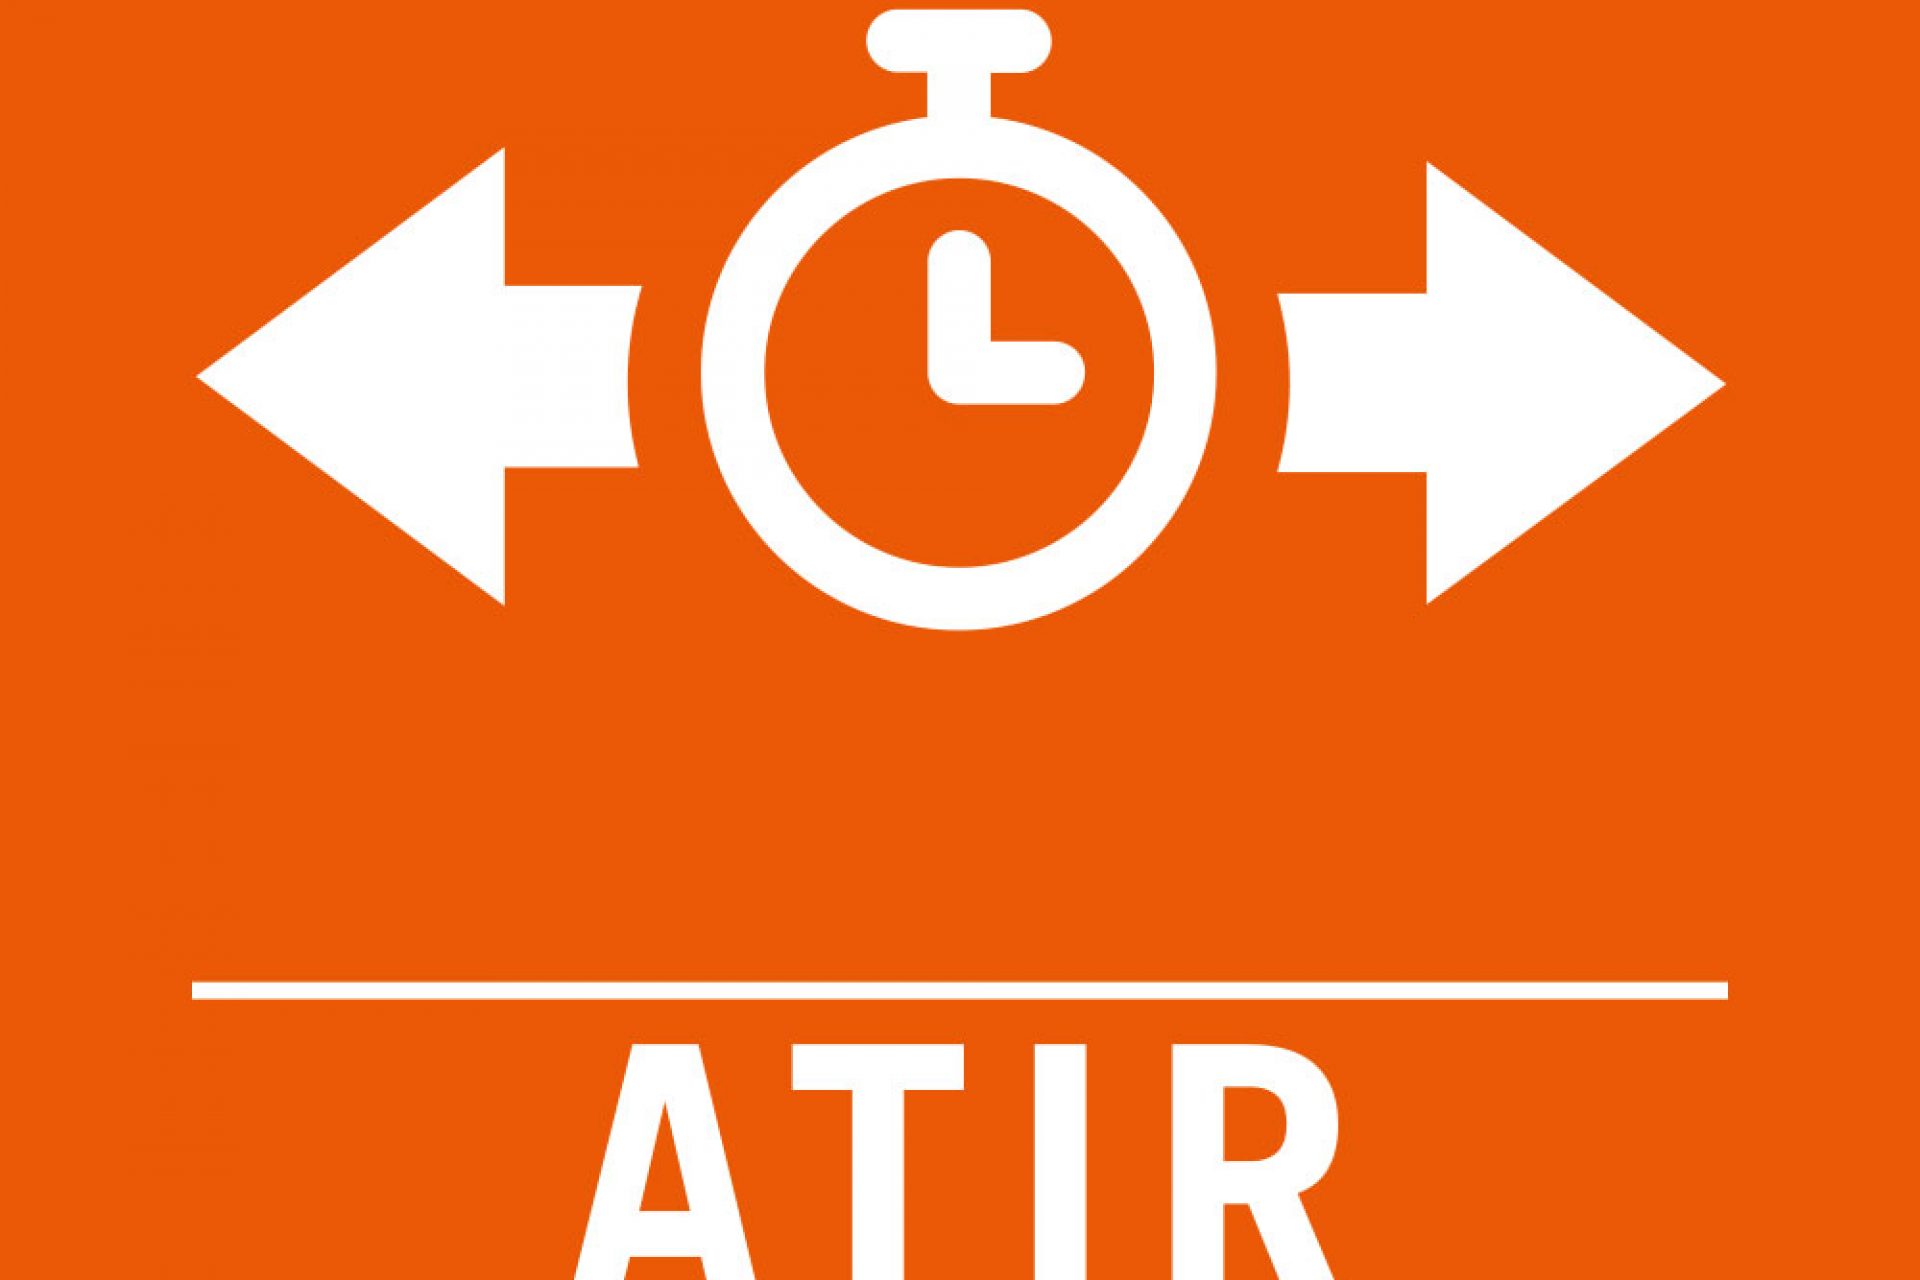 ATIR (AUTOMATIC TURN INDICATOR RESET)